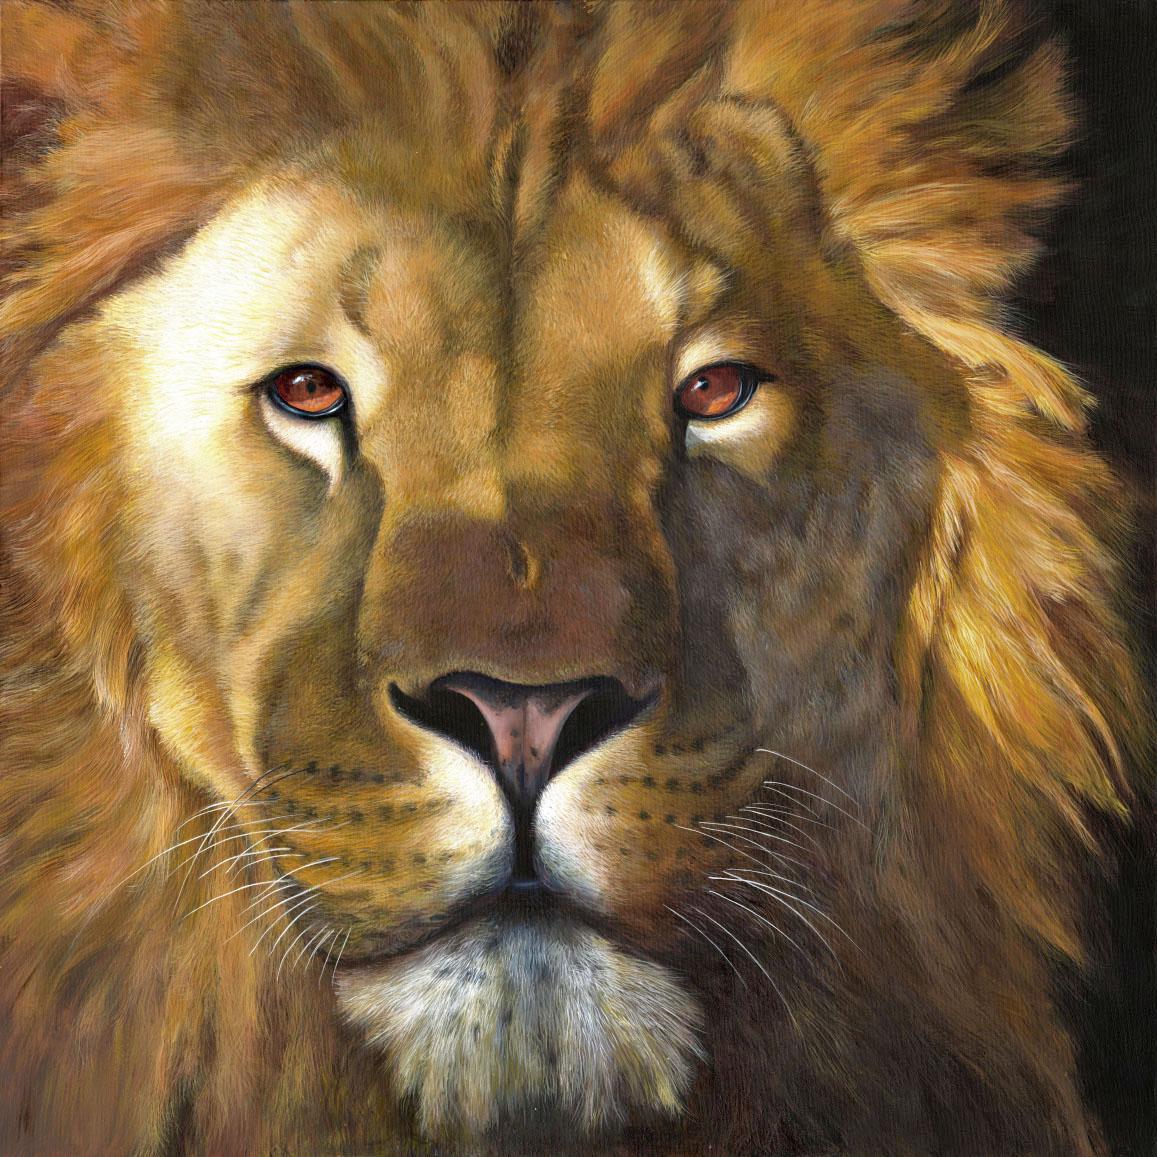 Fabriano Animal Painting - Power Lion-original modern photo realism wildlife oil painting-contemporary Art